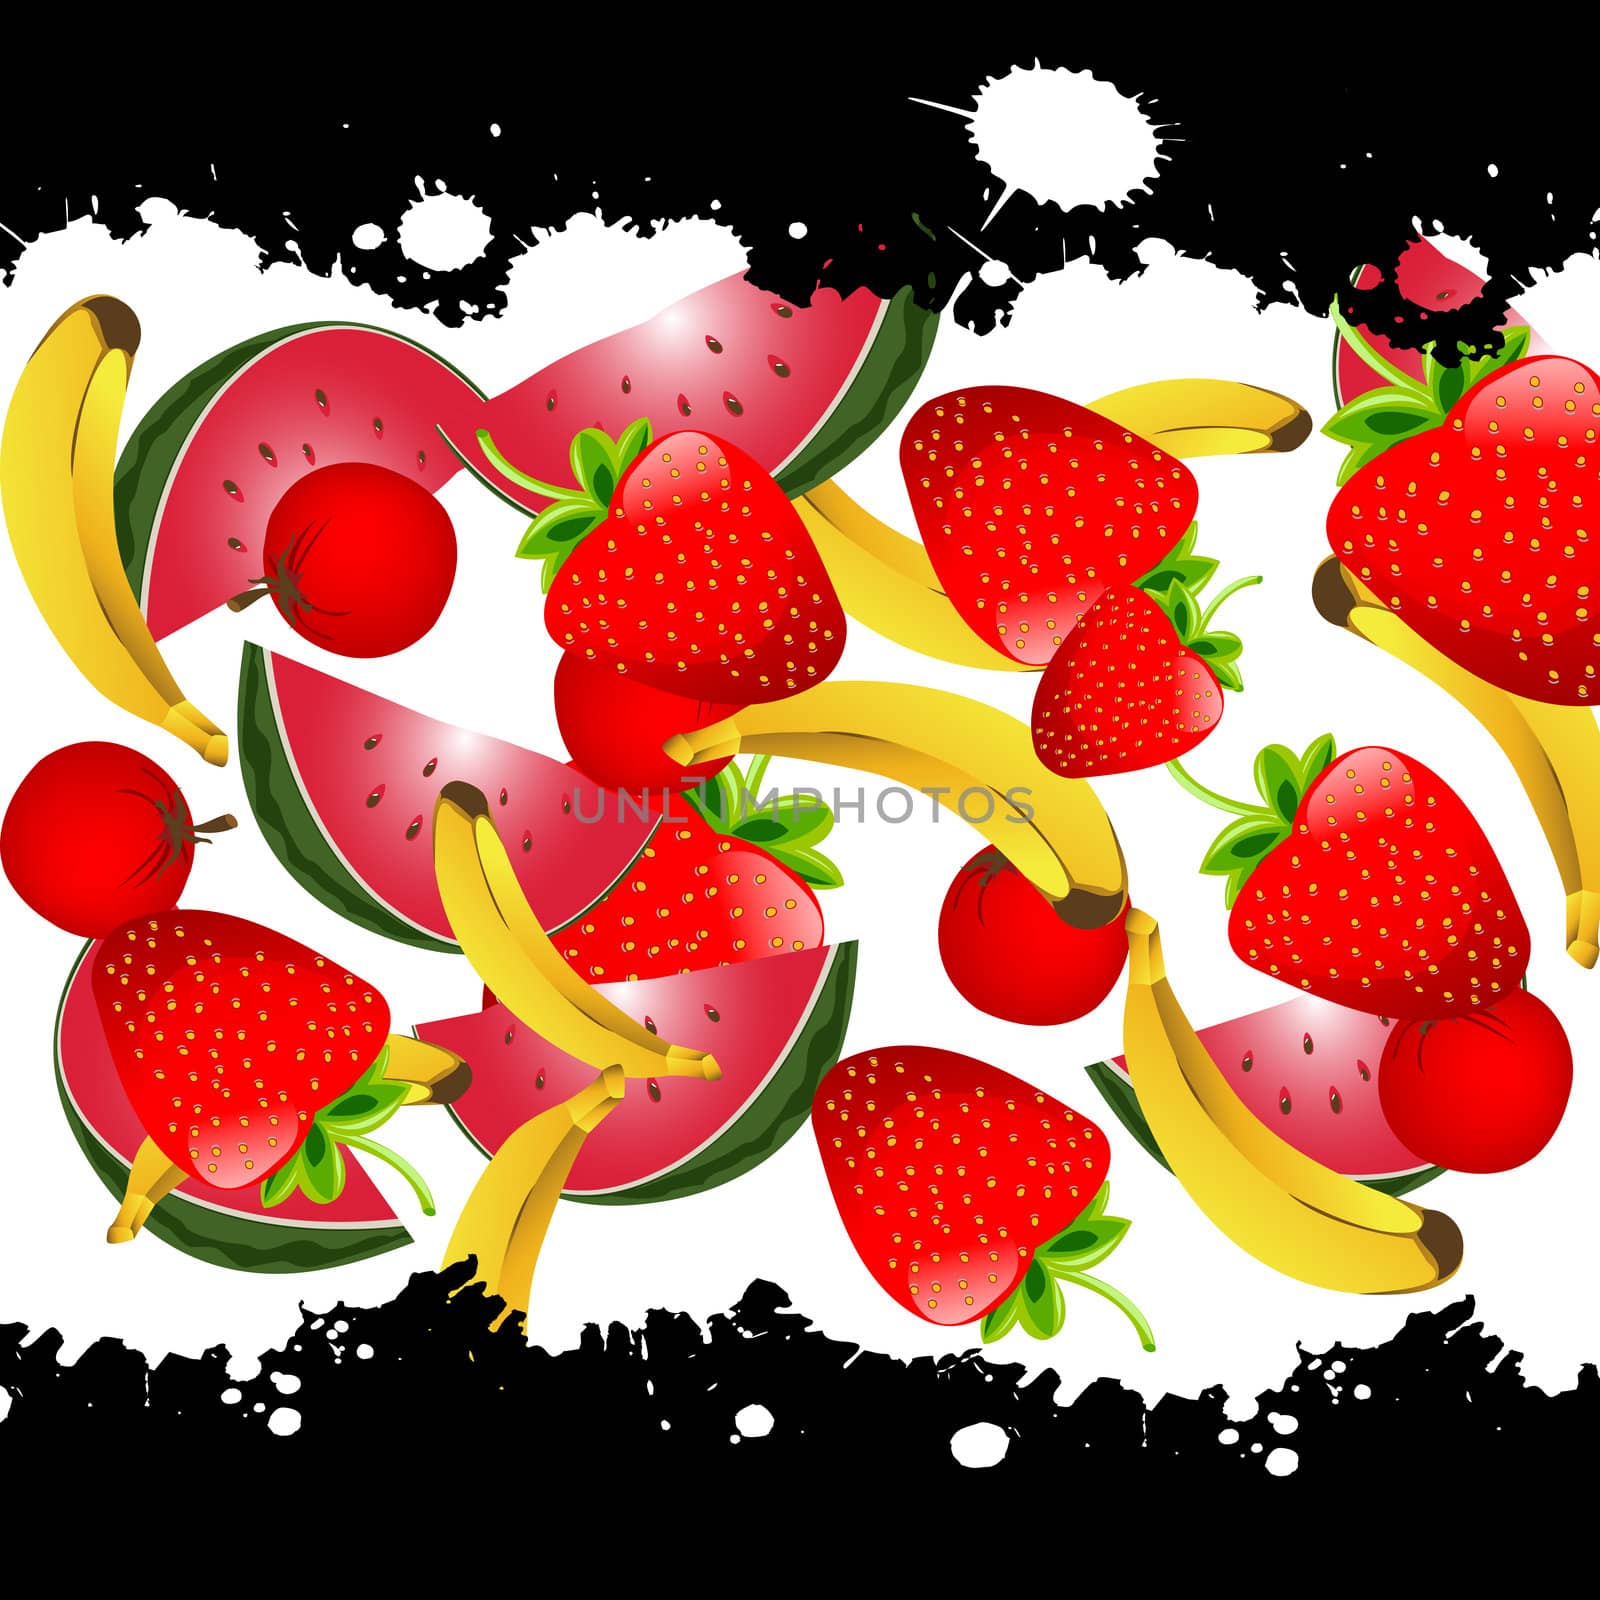 Background illustration with fruits